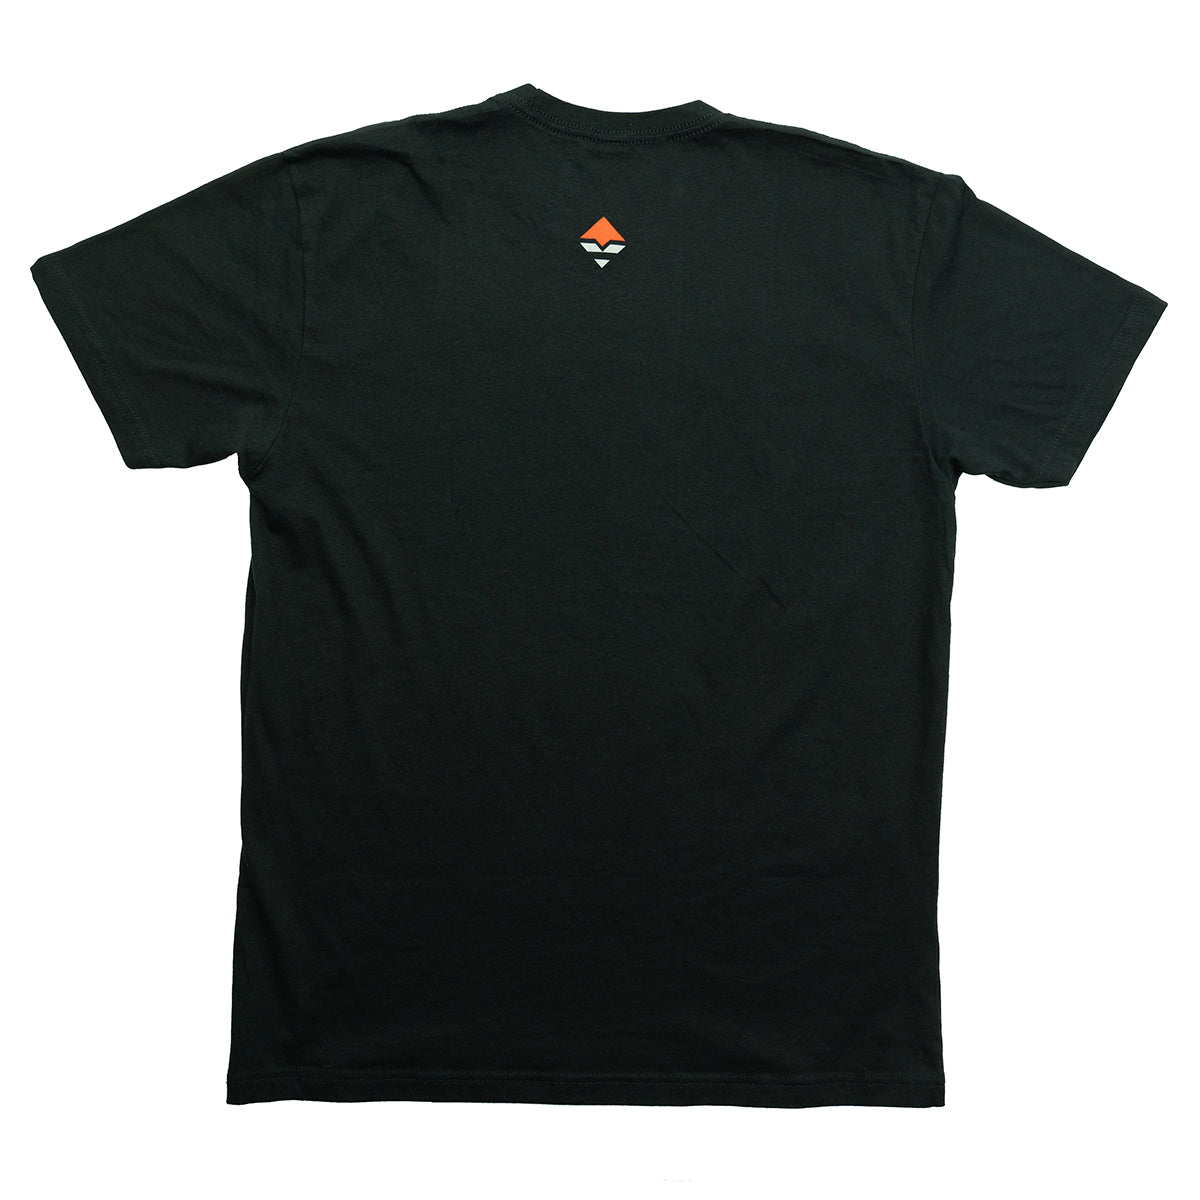 goHUNT Nostalgia Lope T-Shirt by goHUNT | Apparel - goHUNT Shop